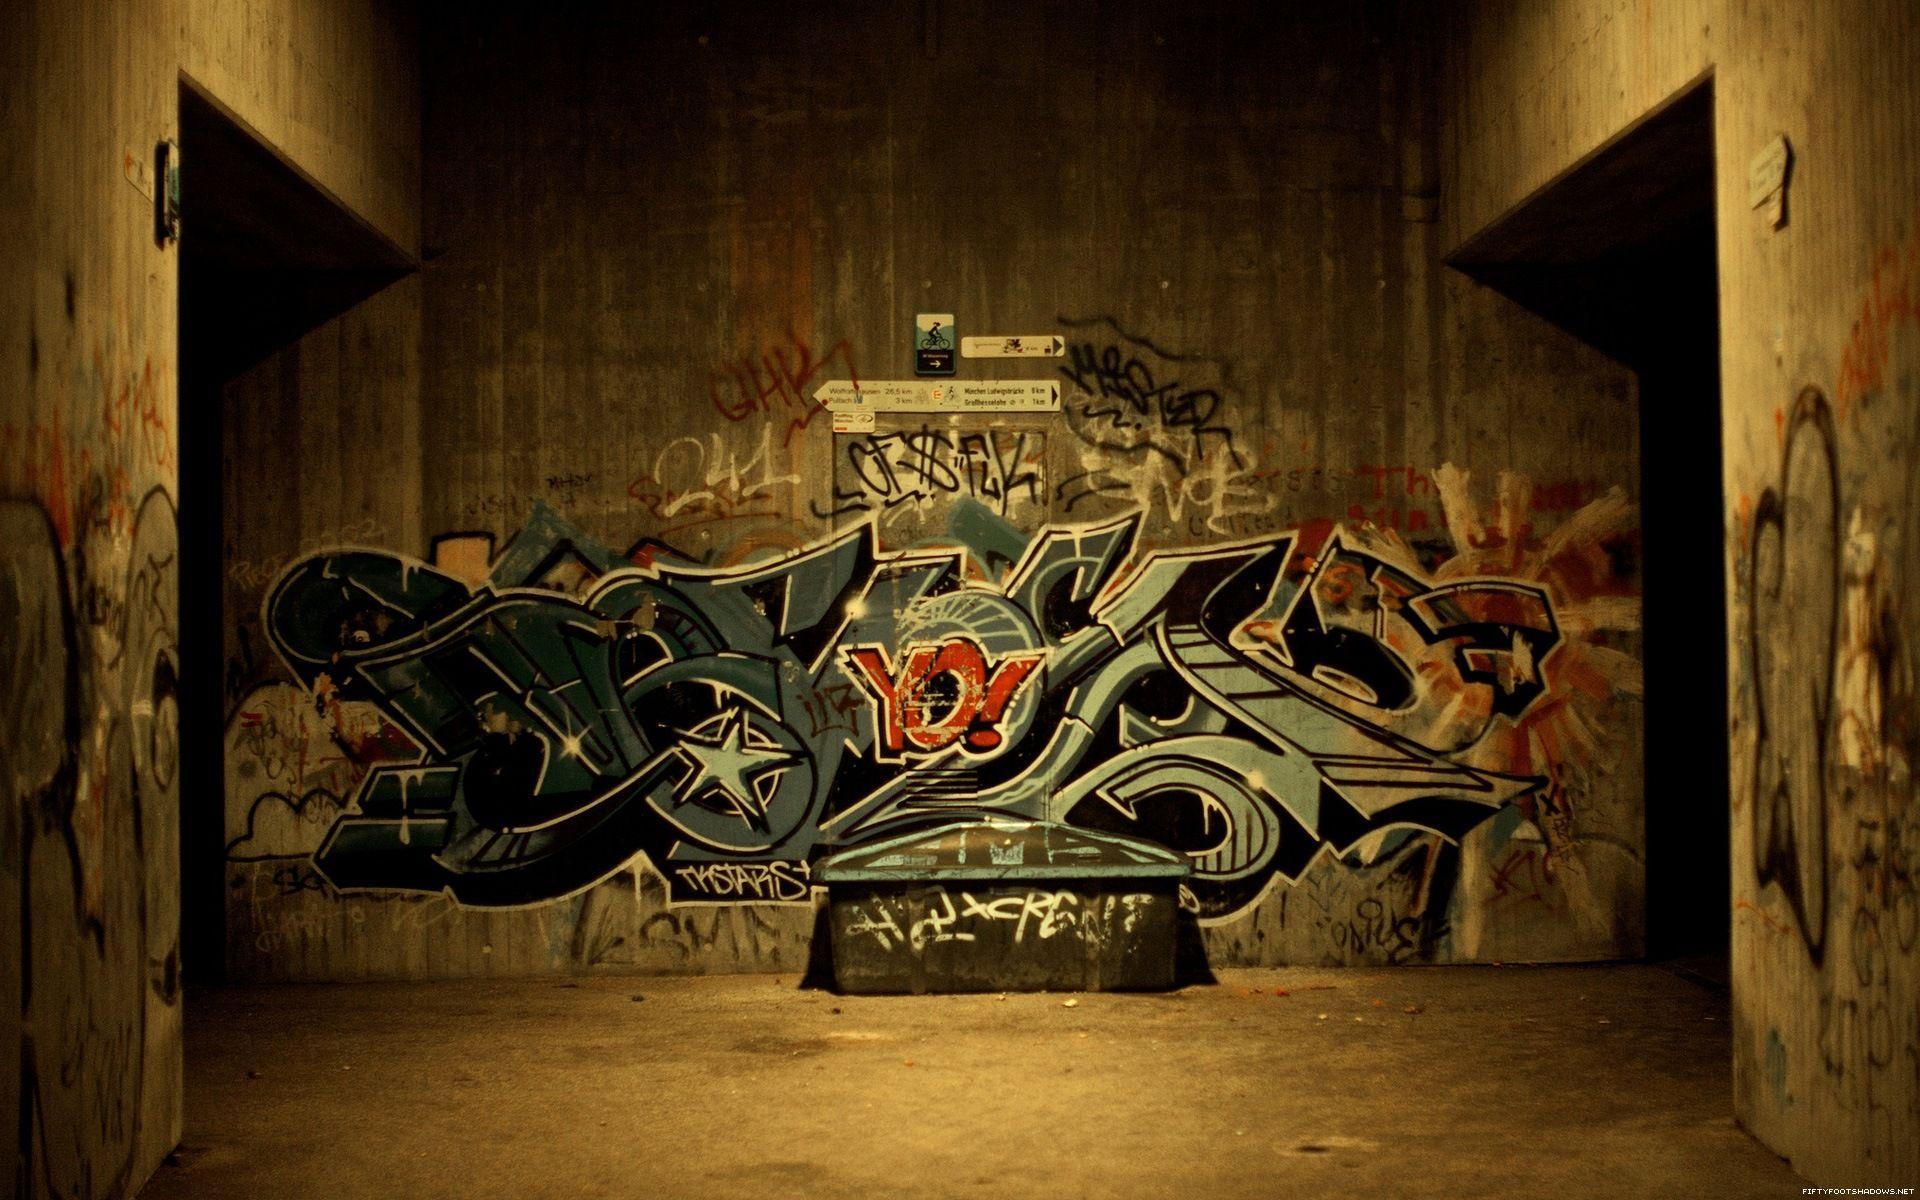 Wallpaper For > Graffiti Wallpaper For Facebook